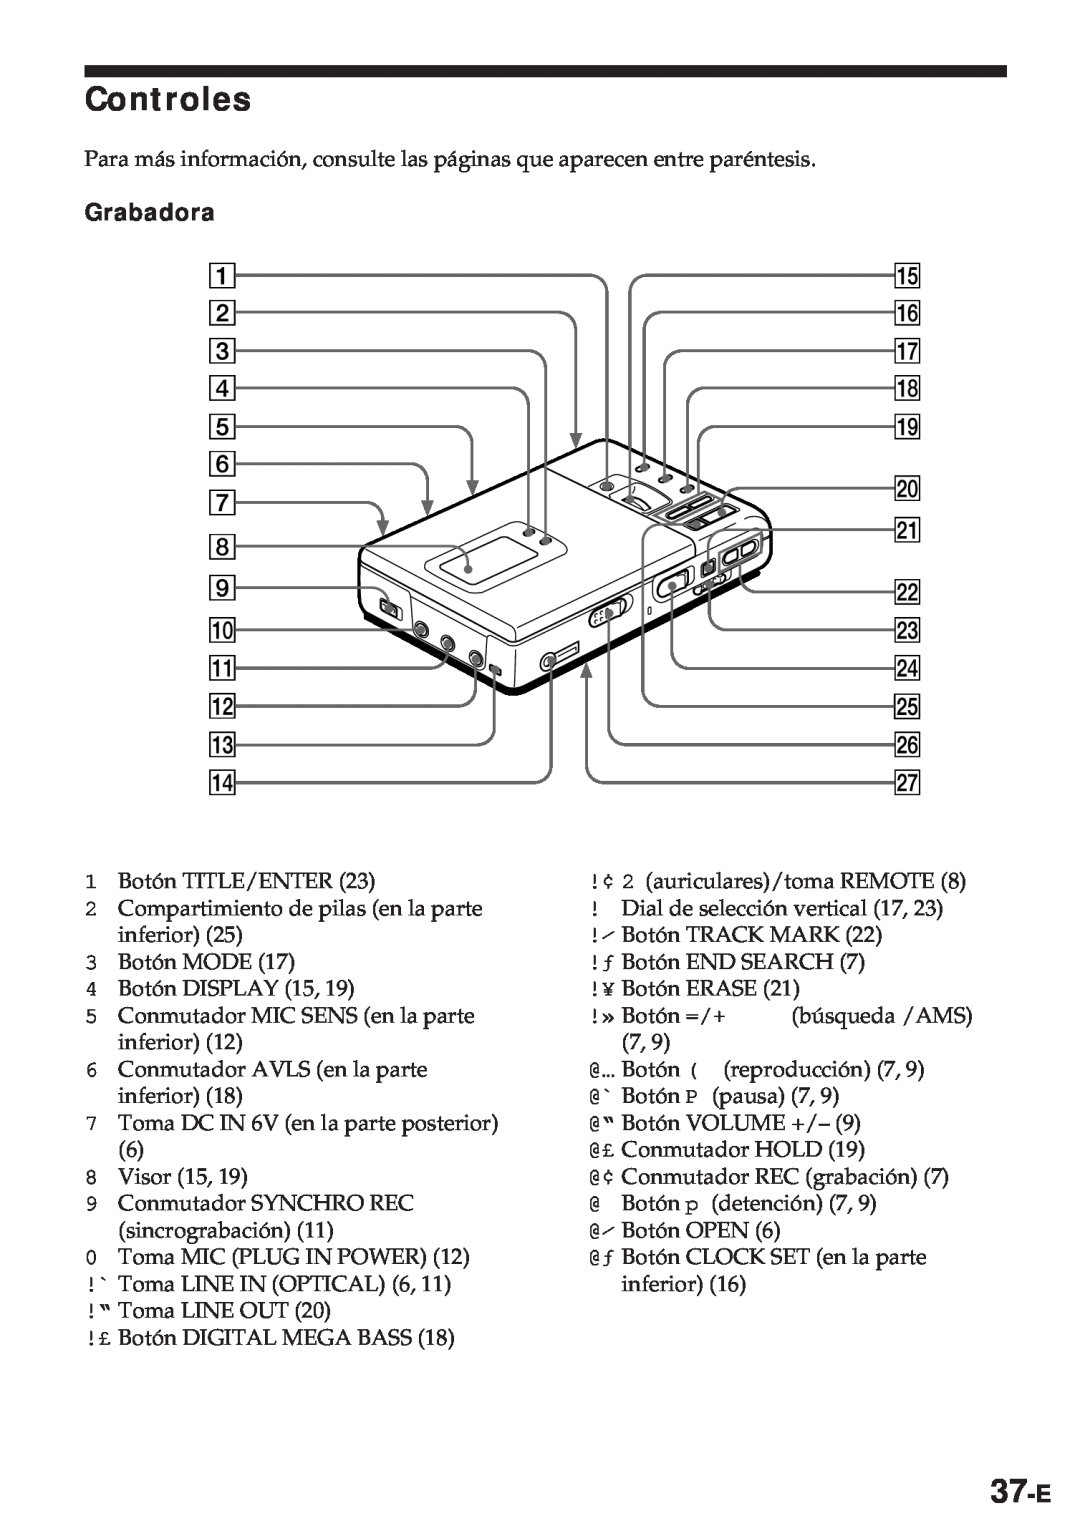 Sony MZ-R30 operating instructions Controles, 37-E, Grabadora 